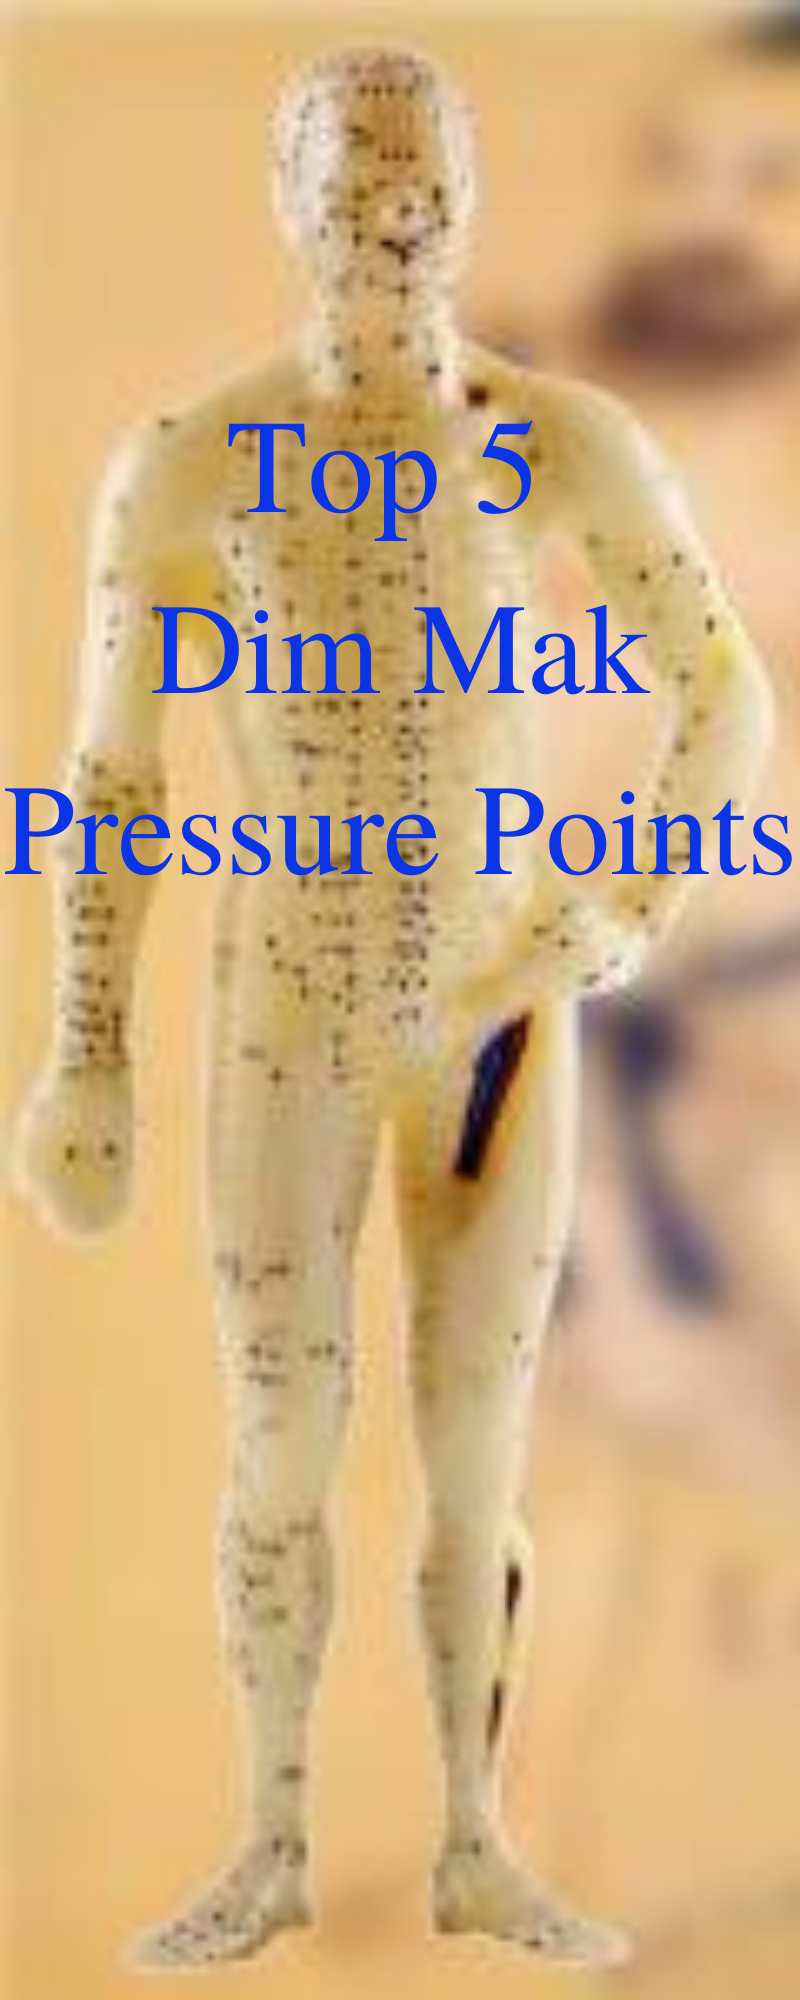 Dim Mak Pressure Points. The Top 5 Vital Points.